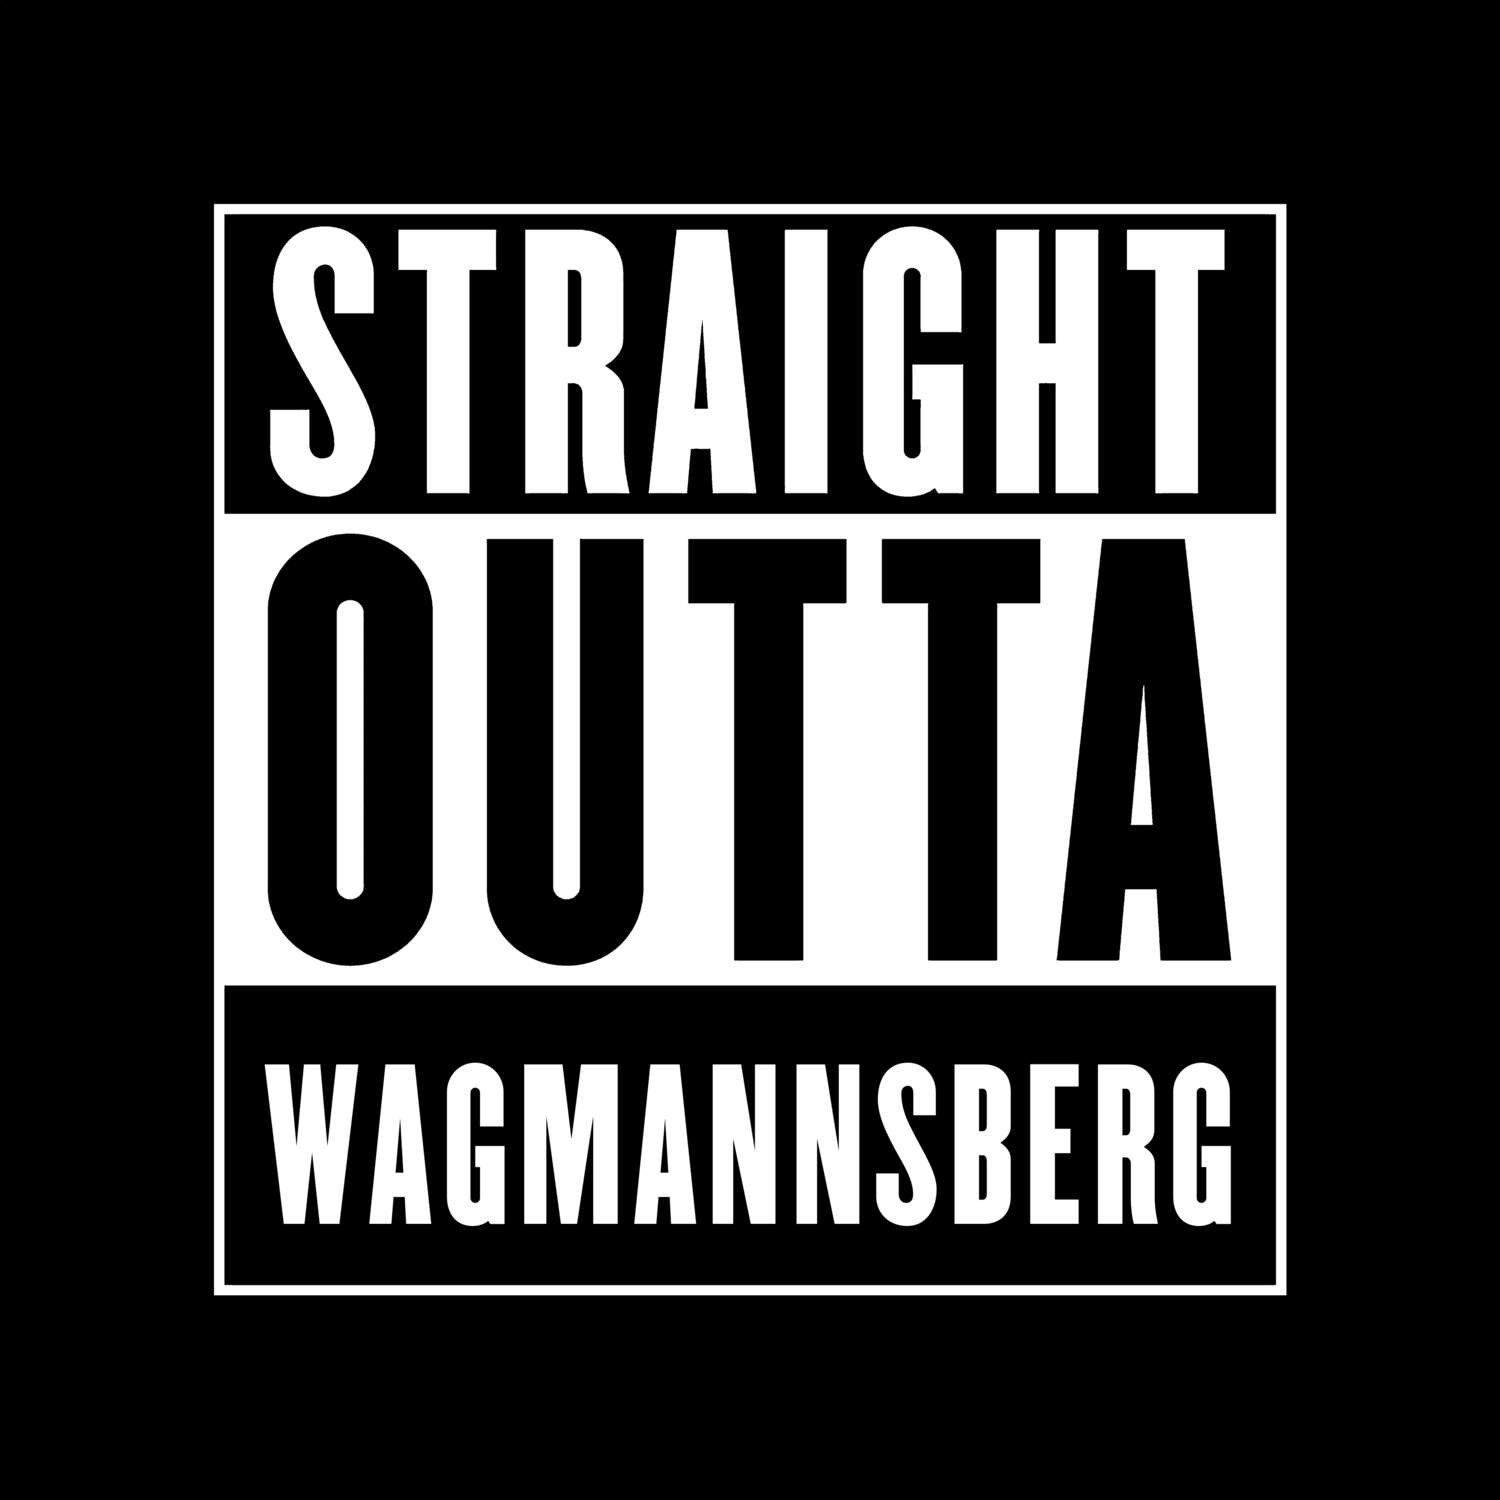 Wagmannsberg T-Shirt »Straight Outta«